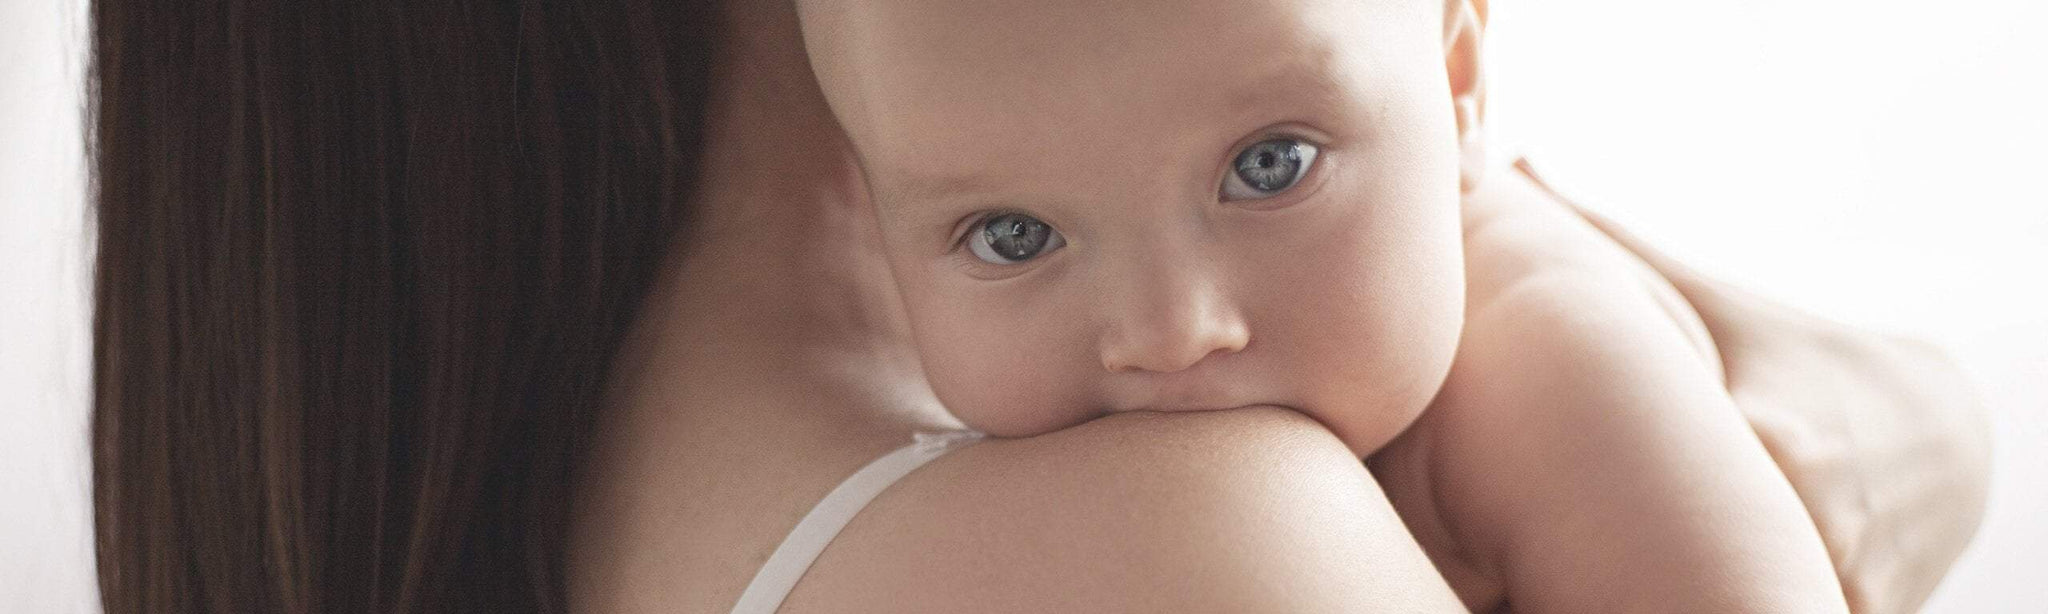 The benefits of breastfeeding